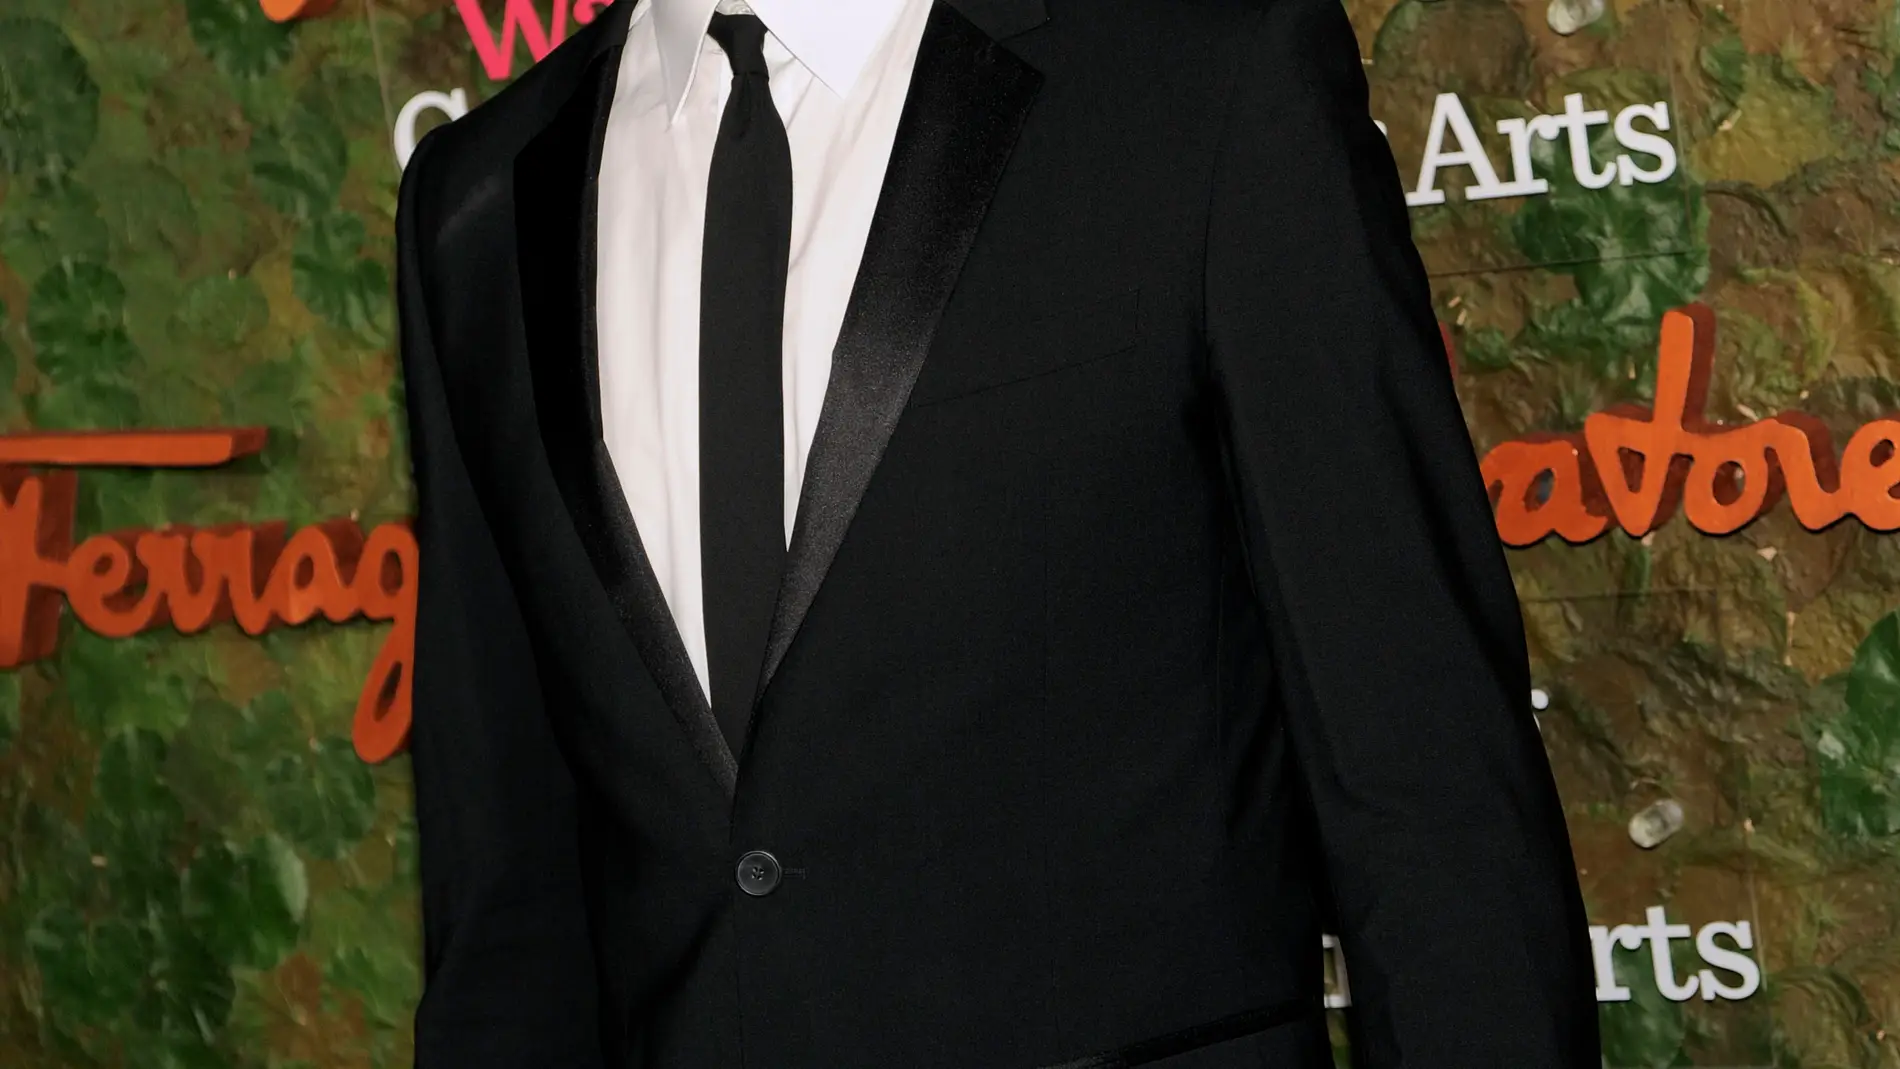 Un elegantísimo y radiante Josh Duhamel